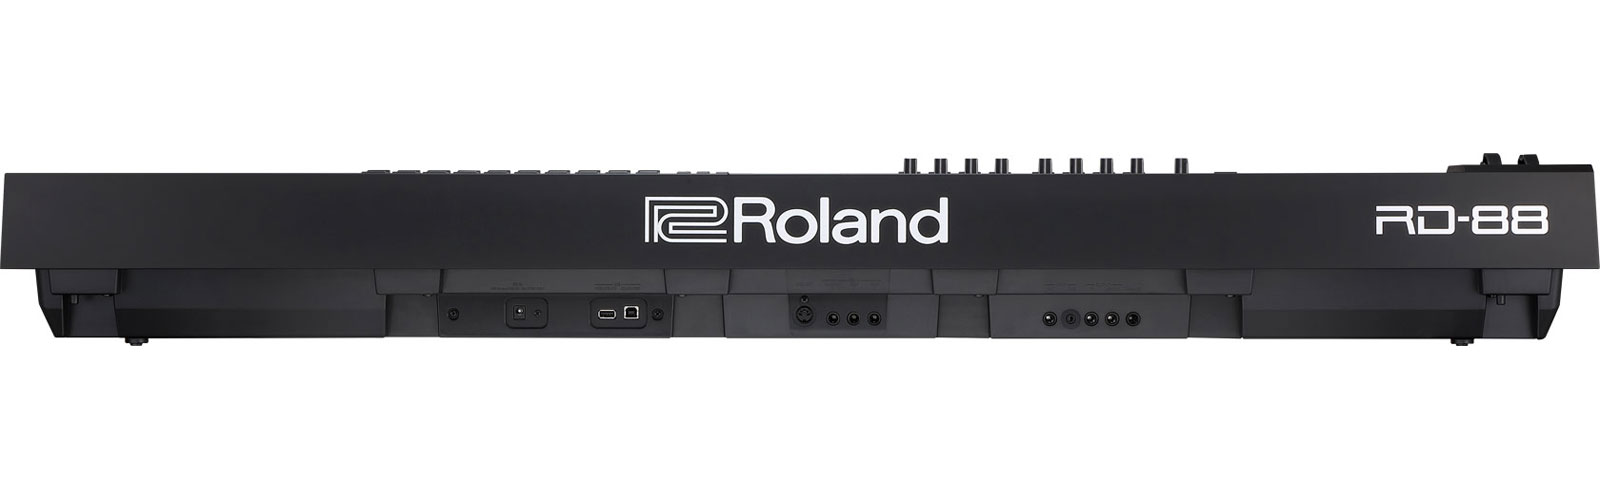 Roland Rd-88 - Stagepiano - Variation 5